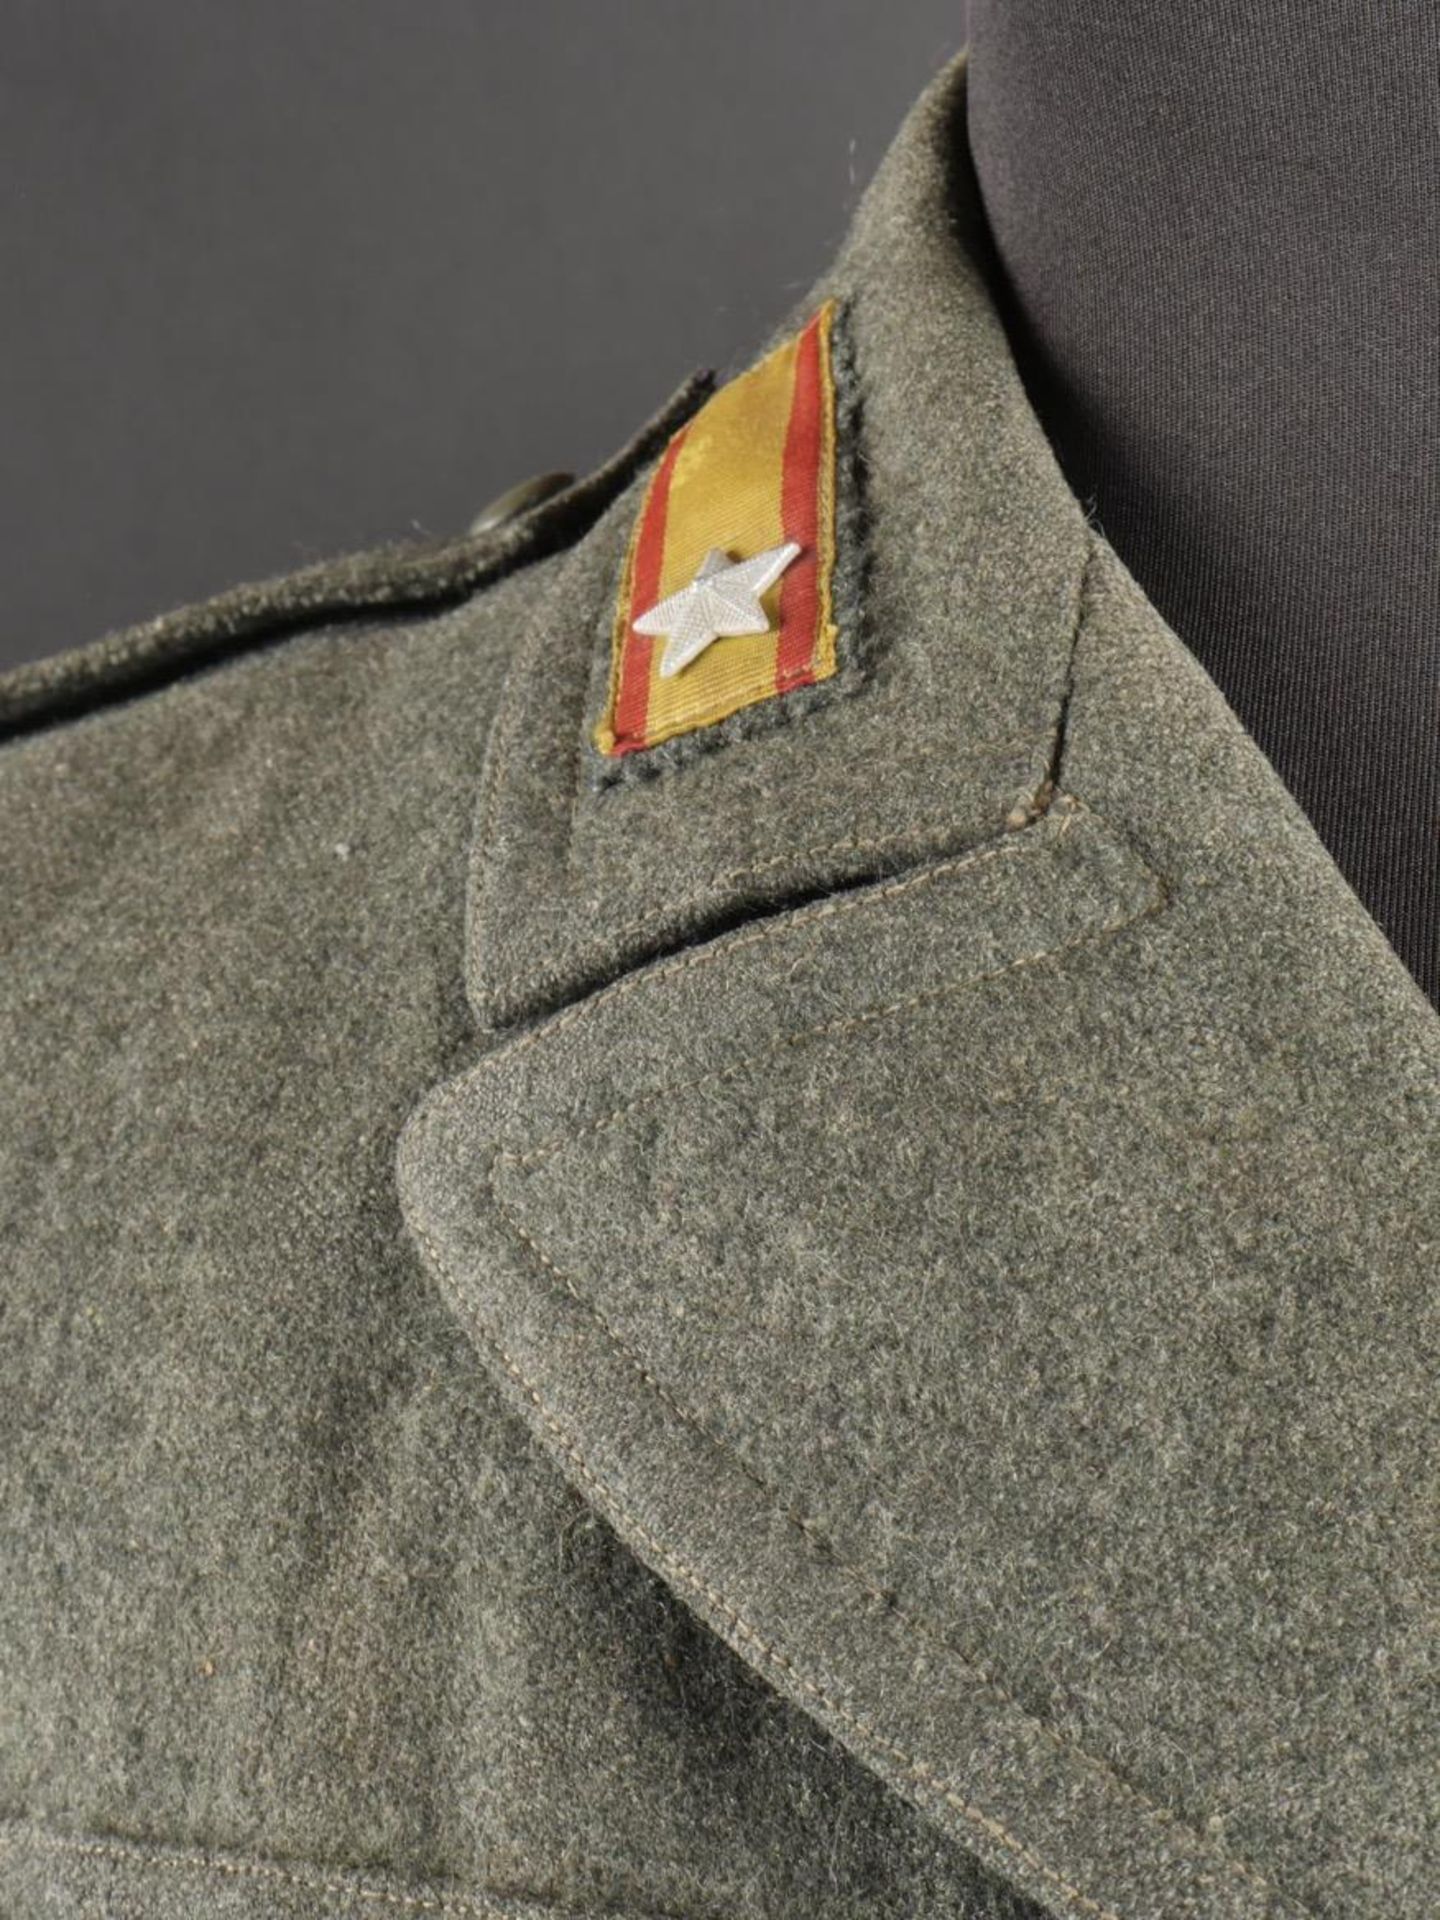 Vareuse de Lieutenant de la division Messina. Messina Division Lieutenant s jacket. - Image 6 of 19